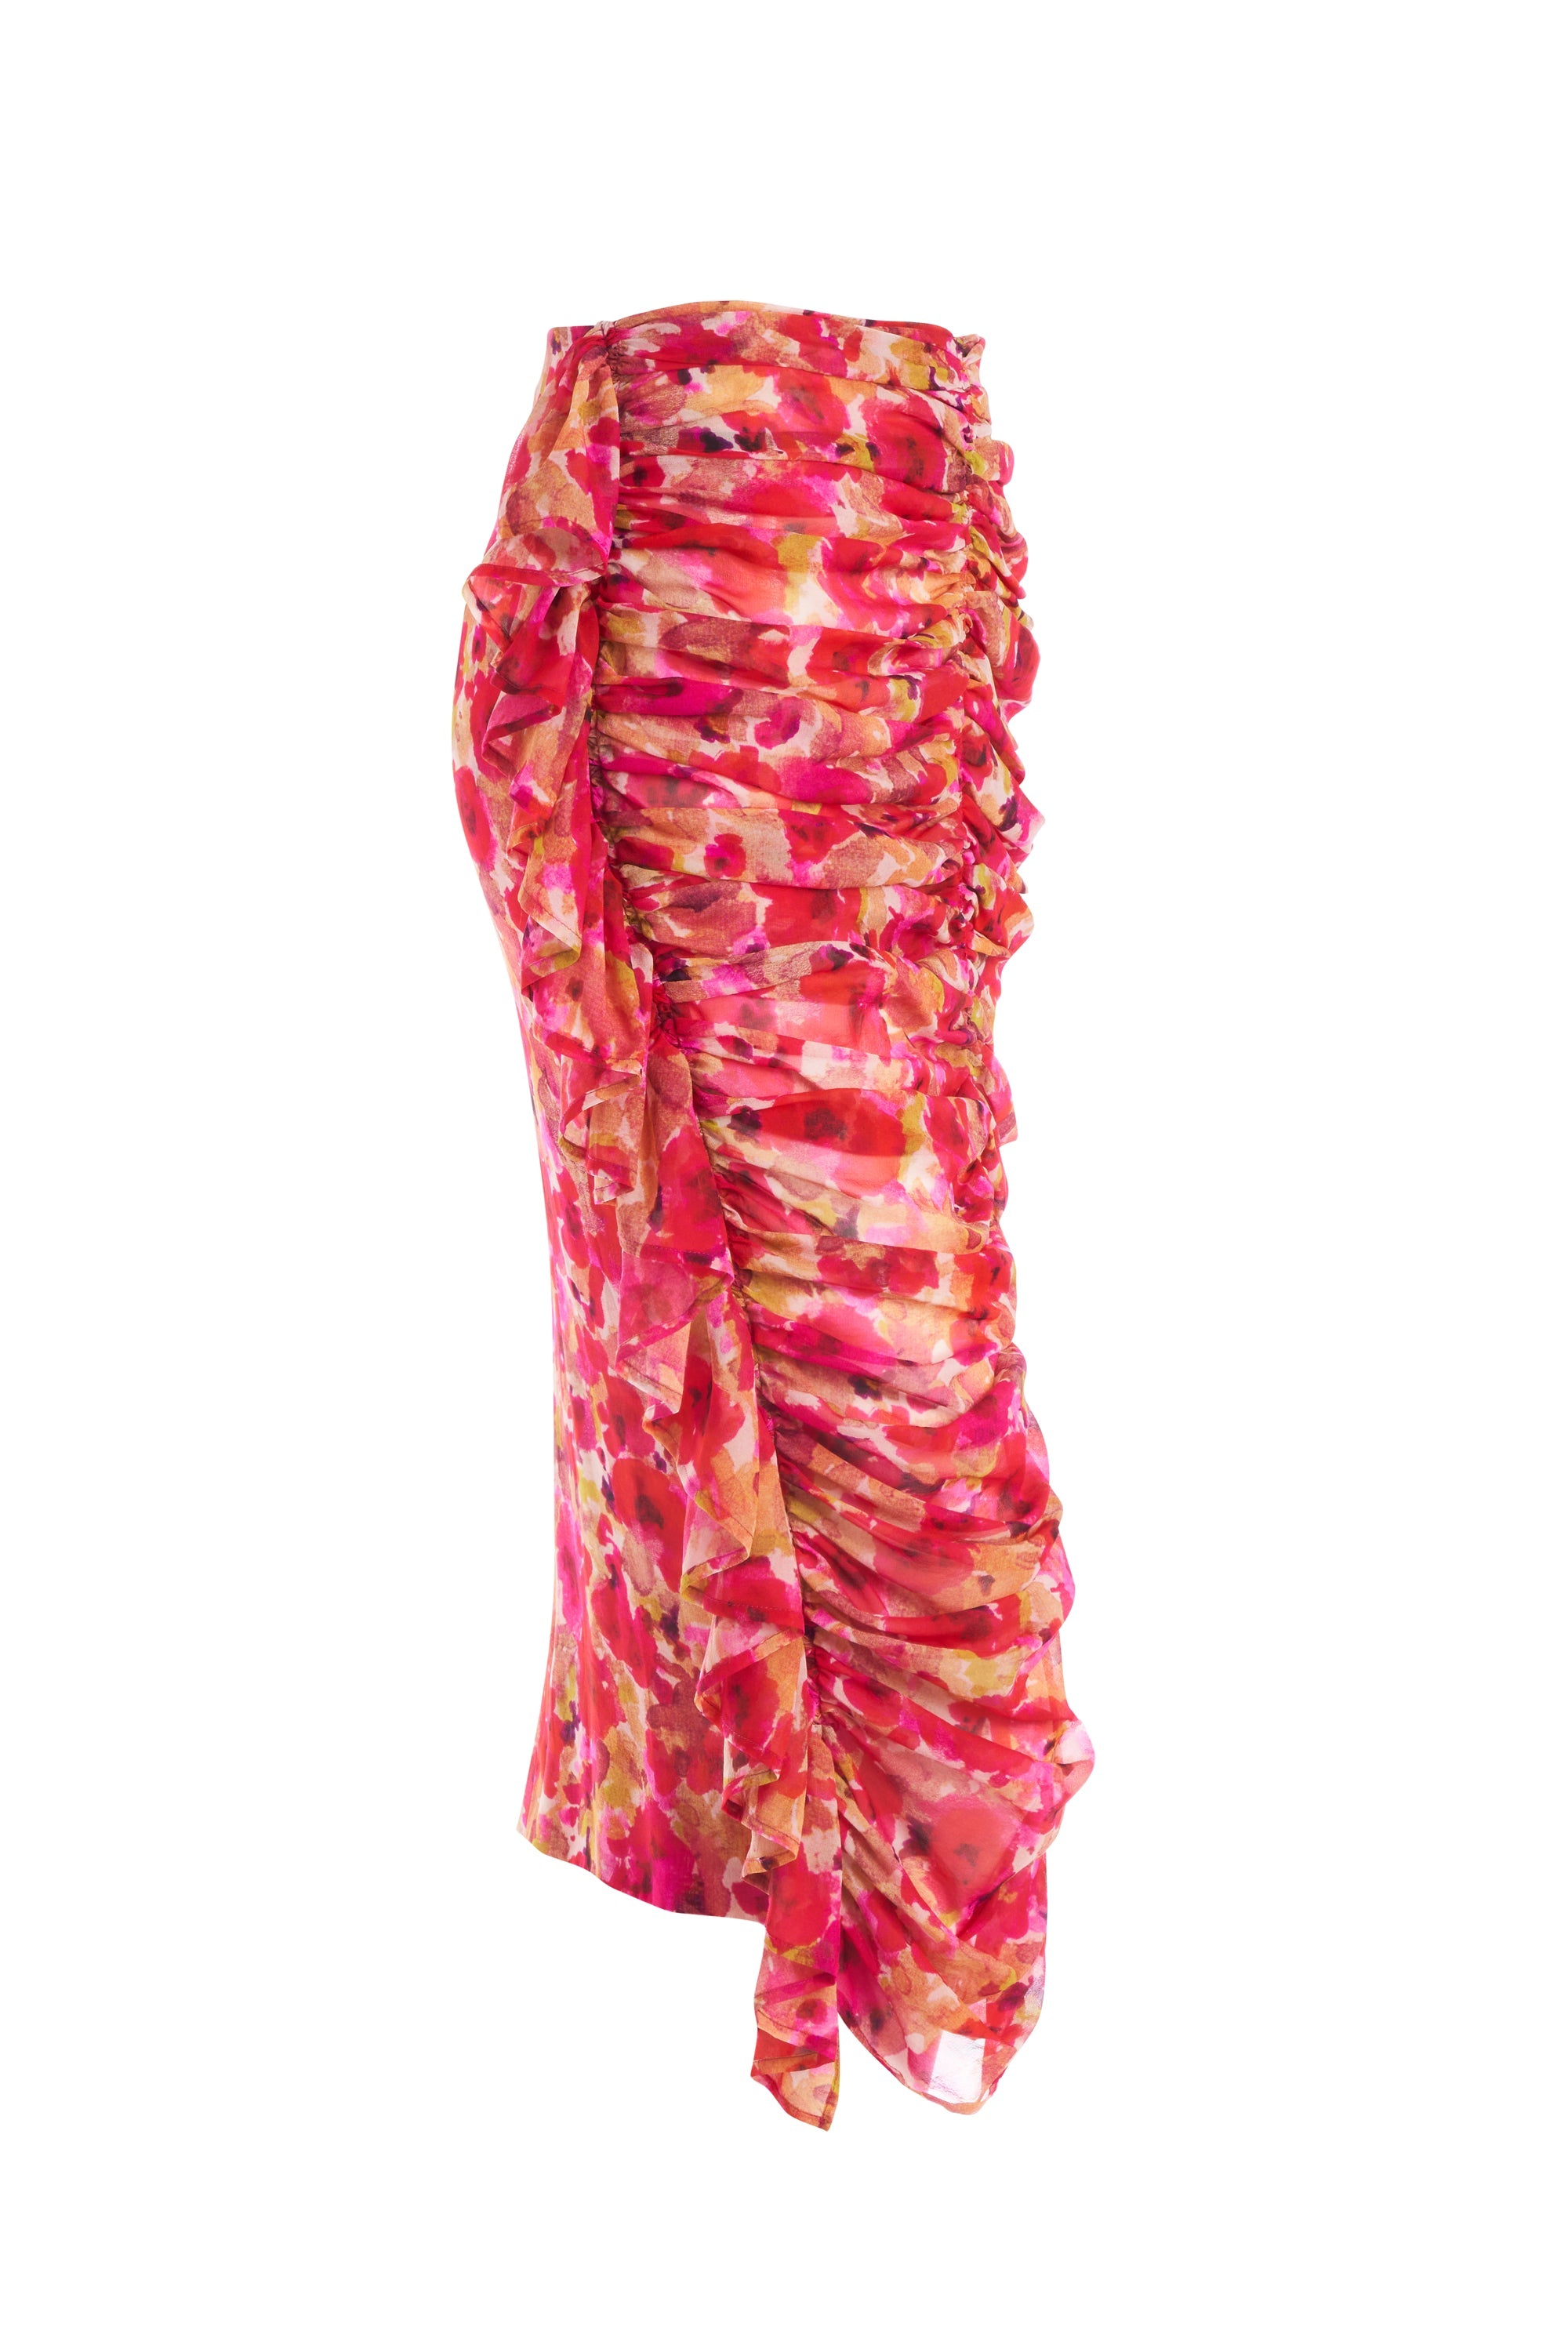 Dries Van Noten Red Ruffled Pencil Skirt - Foxy Couture Carmel